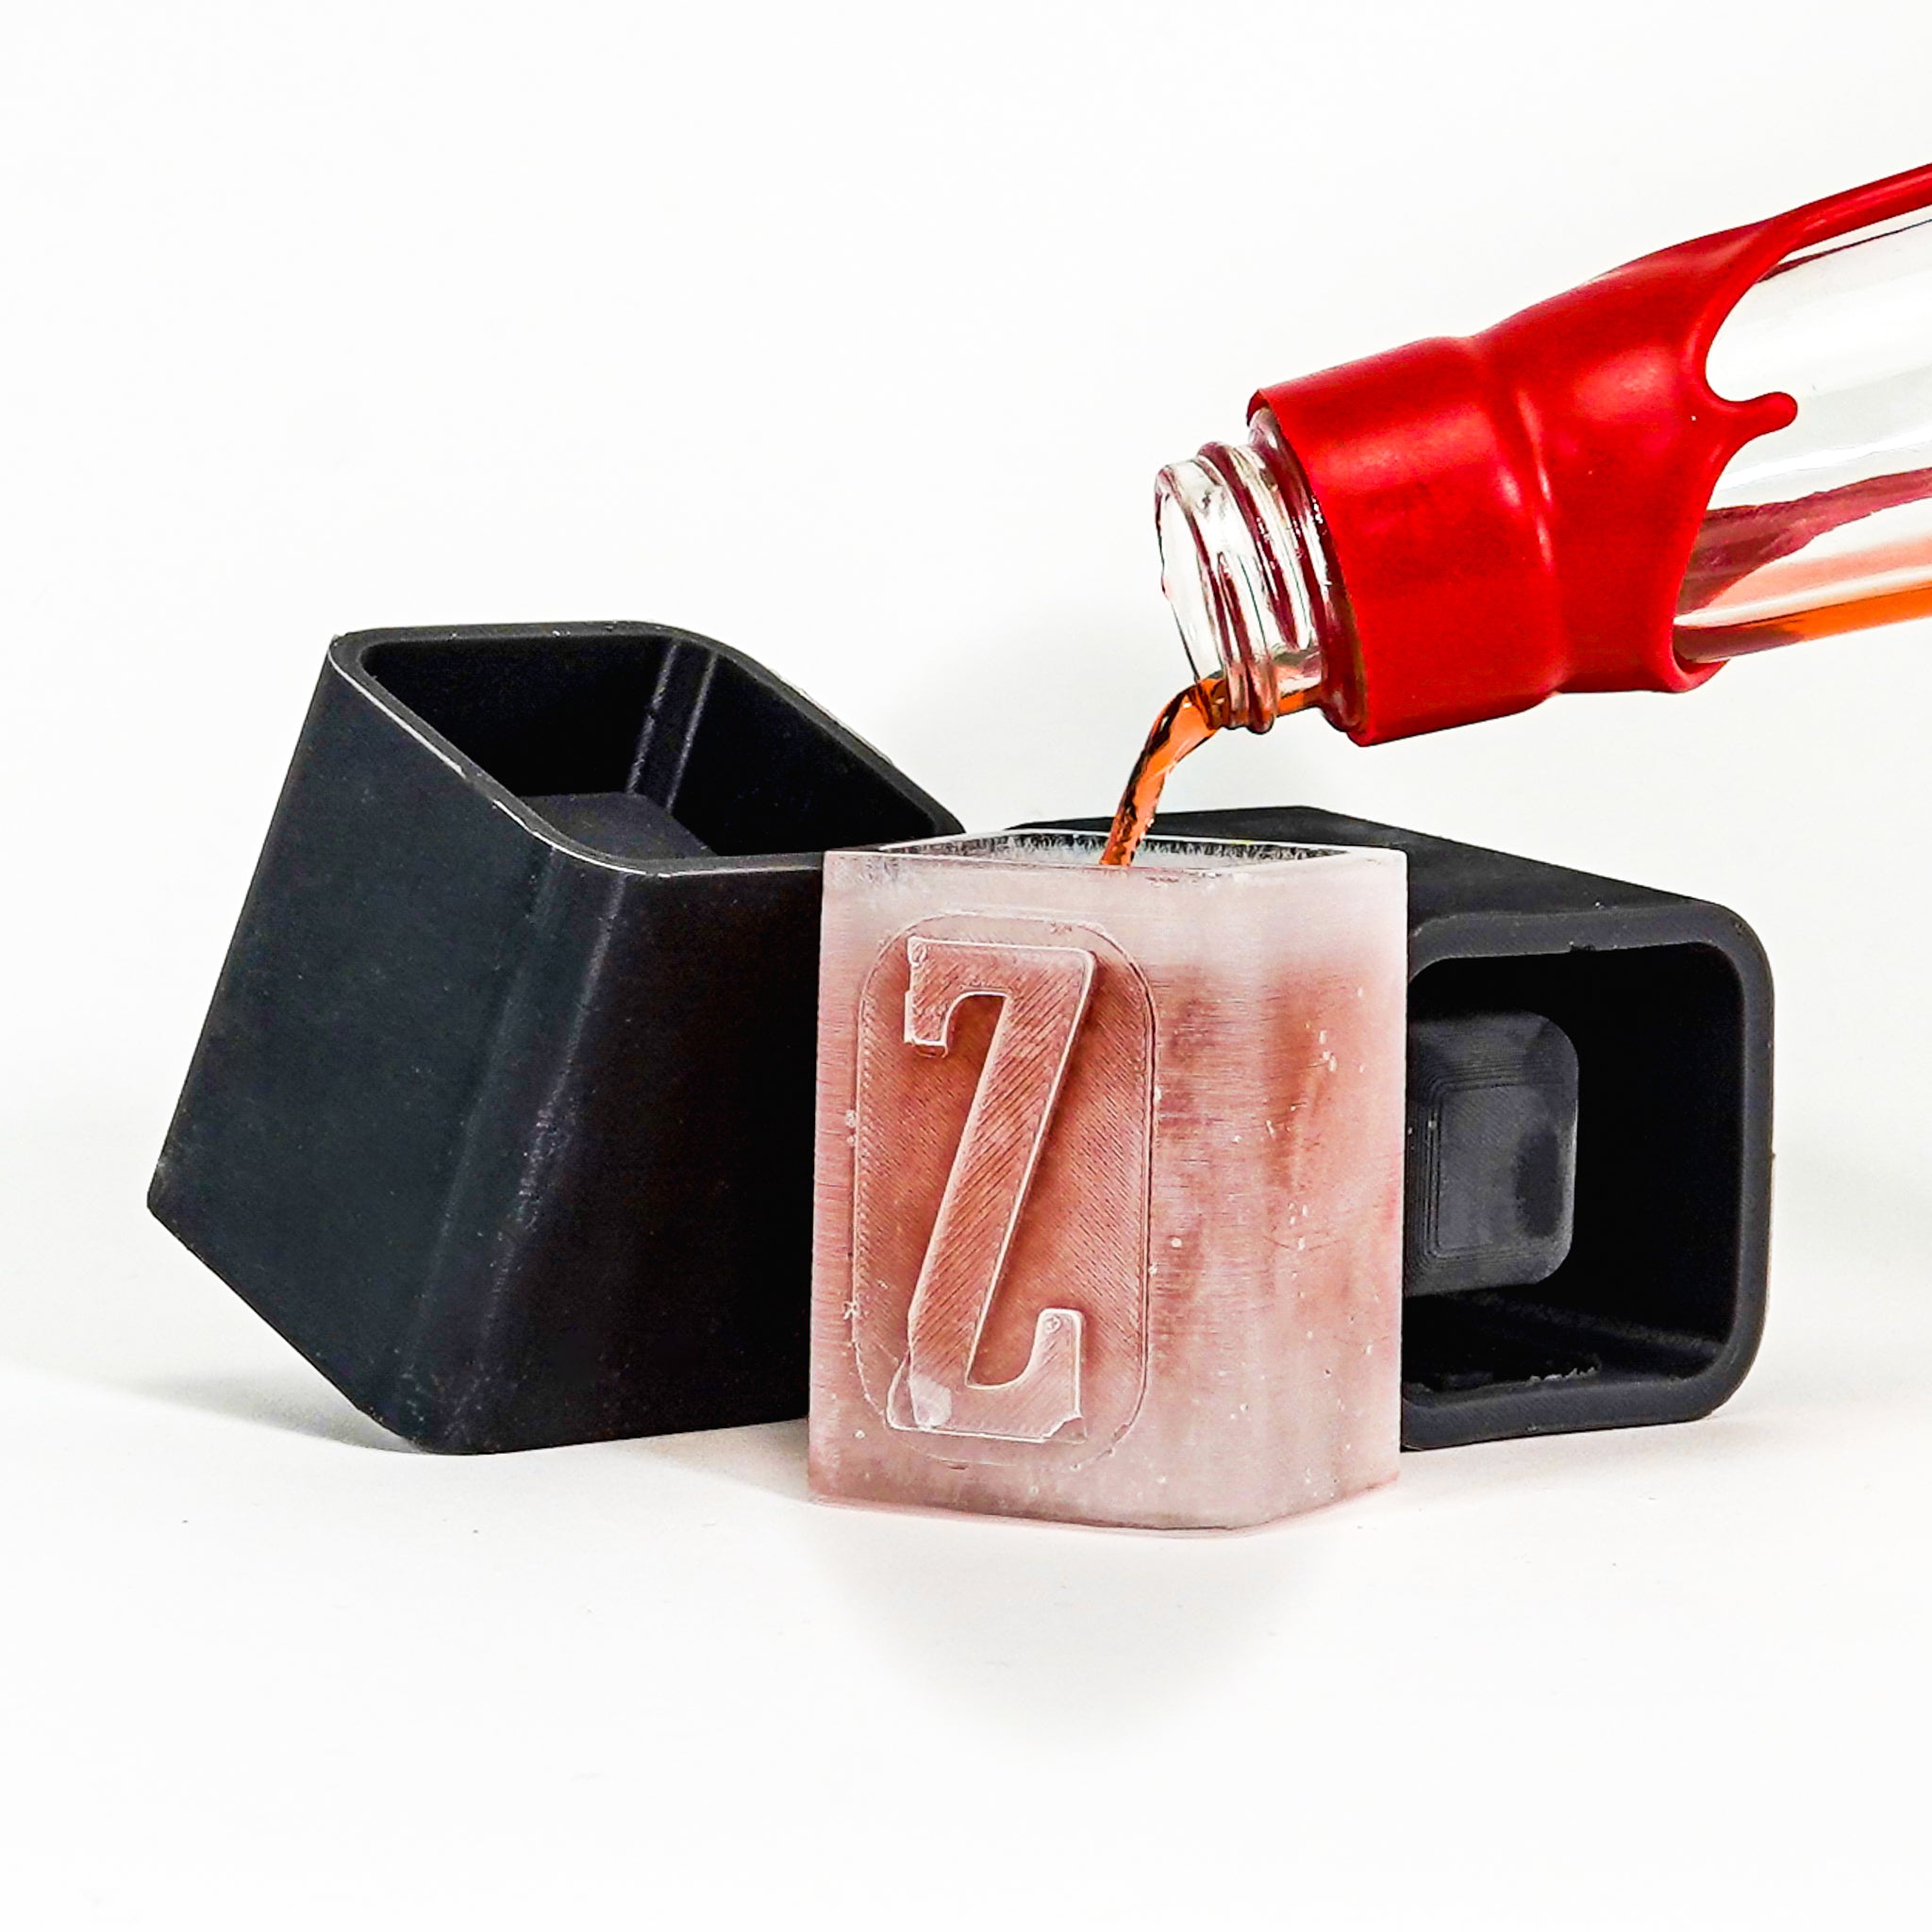 Customizable 1-Inch Gummy Mold – Siligrams